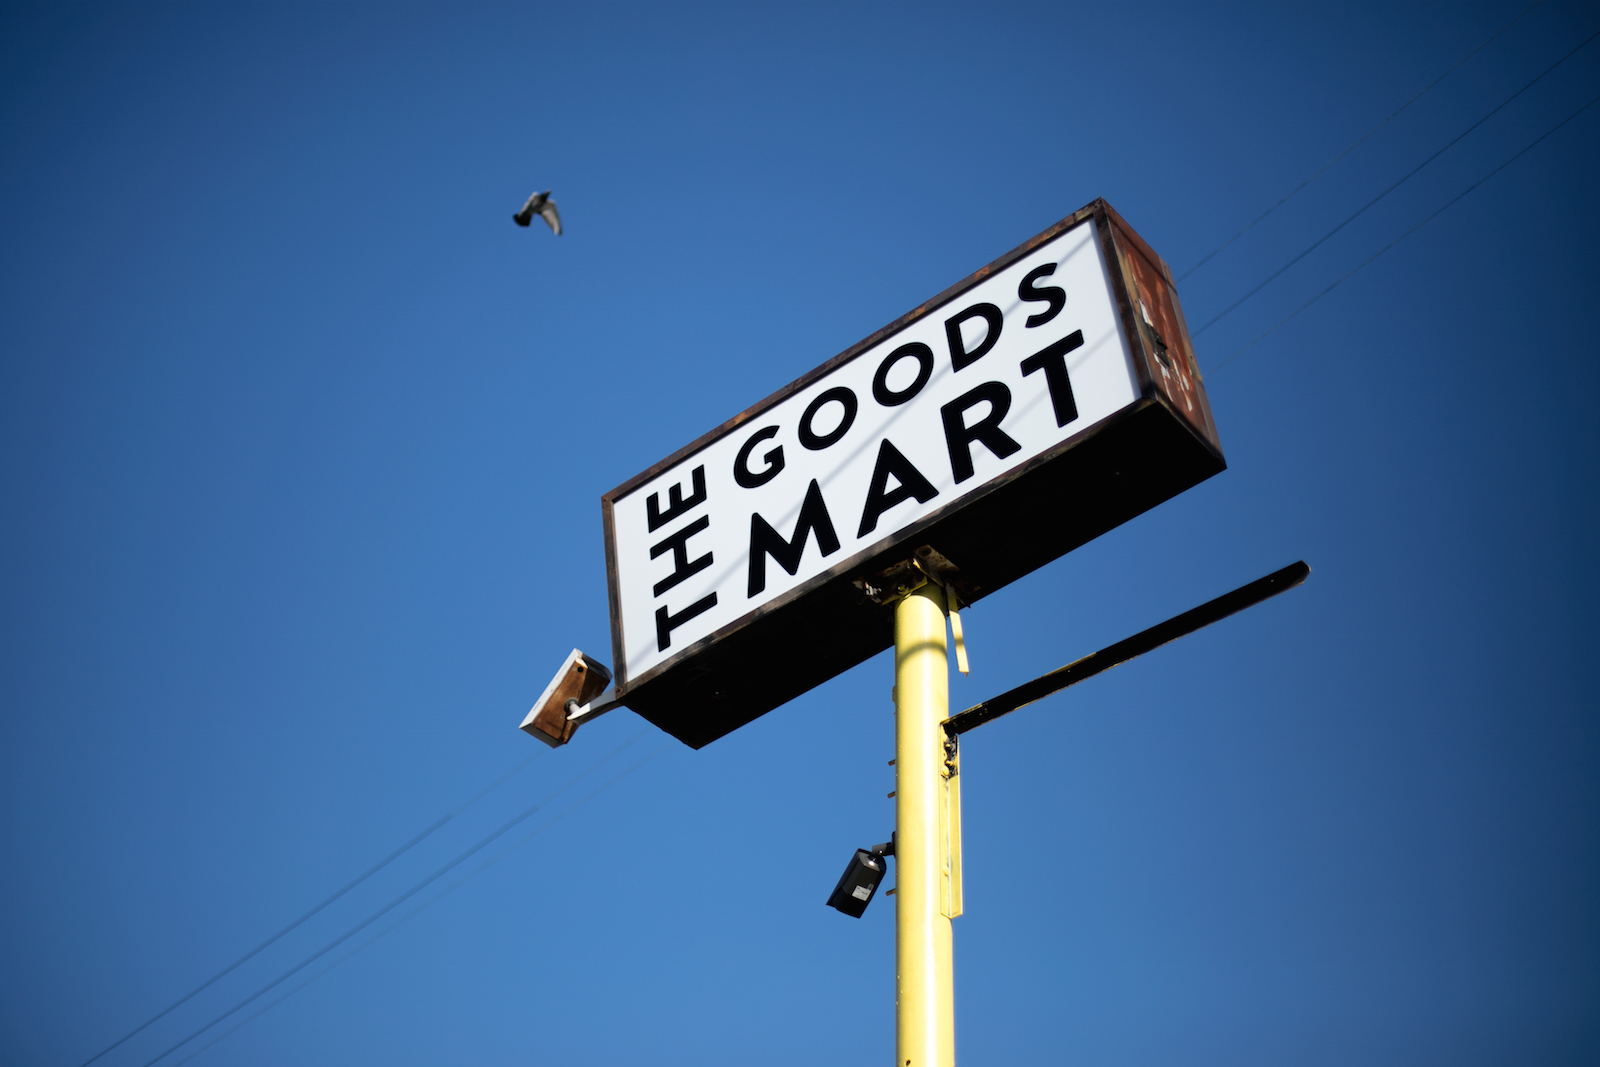 The Goods Mart